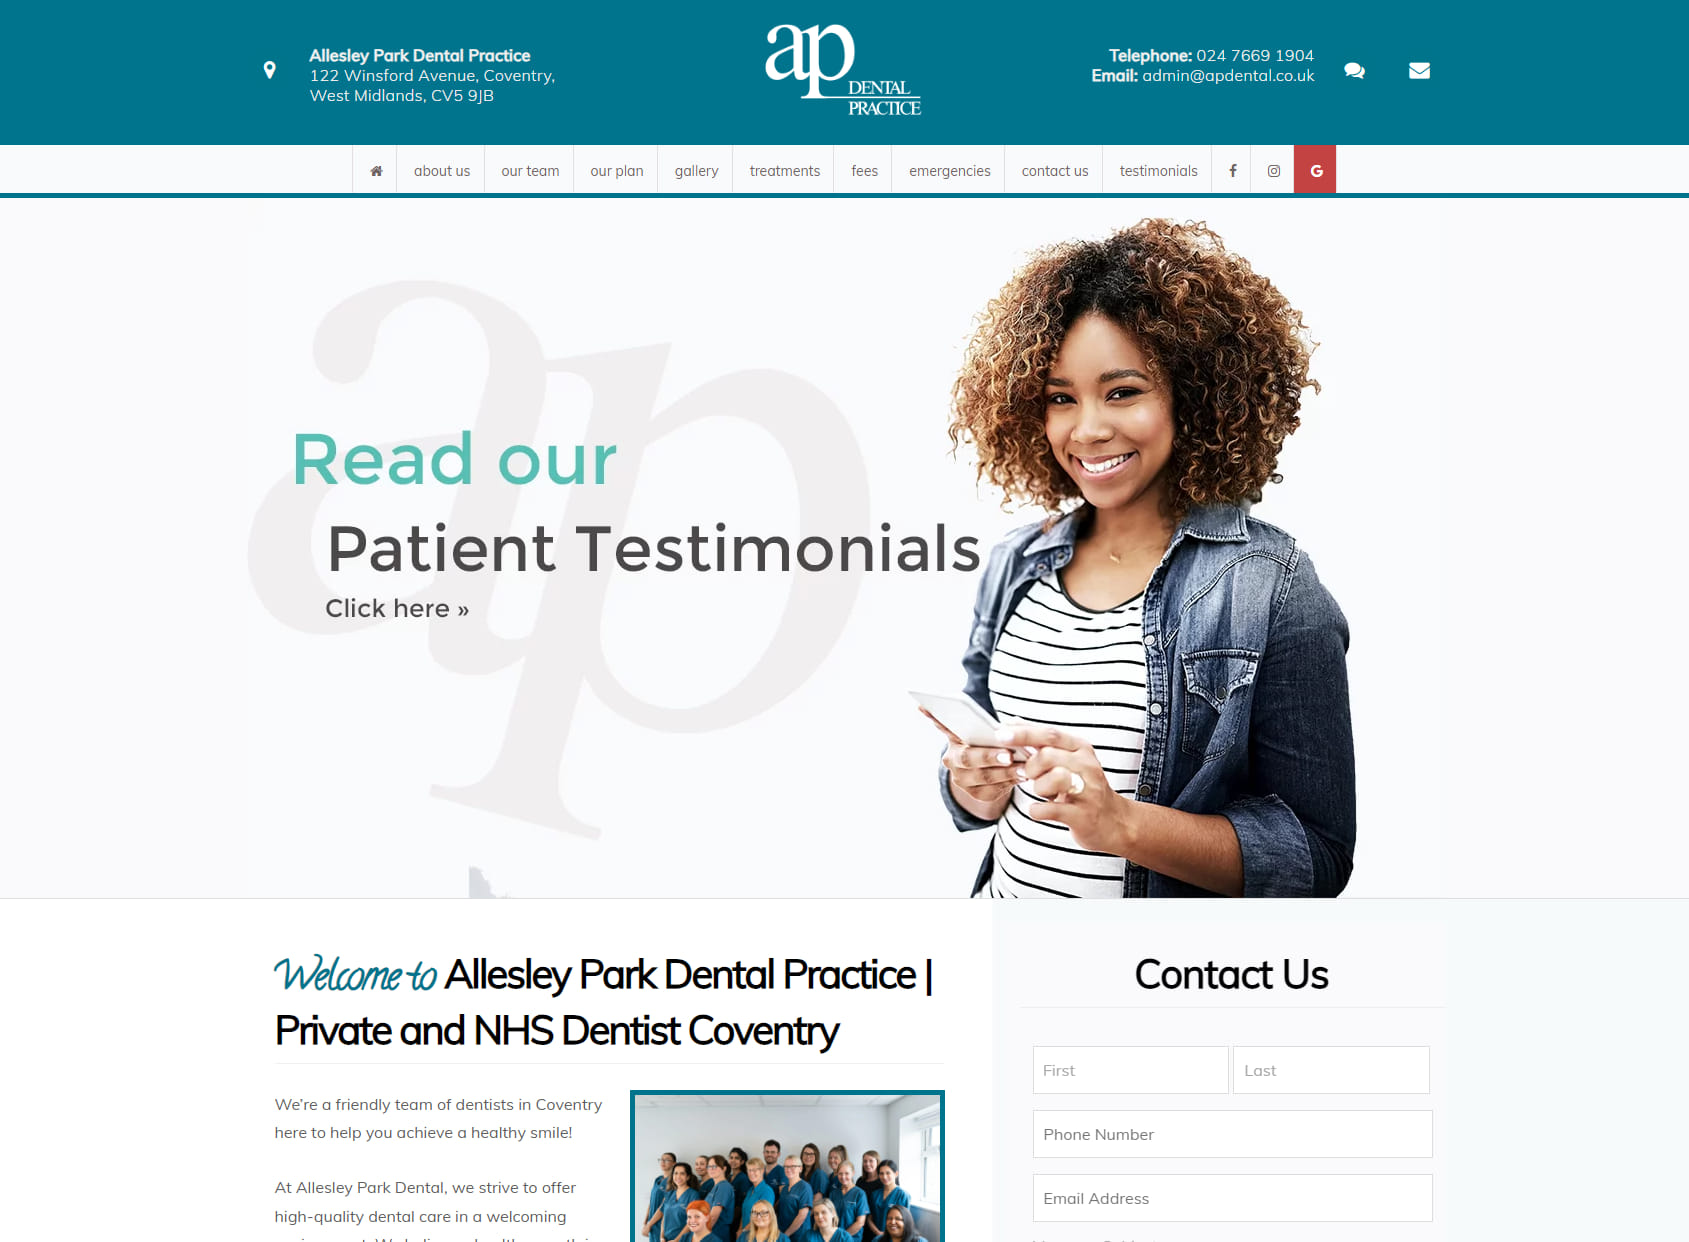 Allesley Park Dental Practice